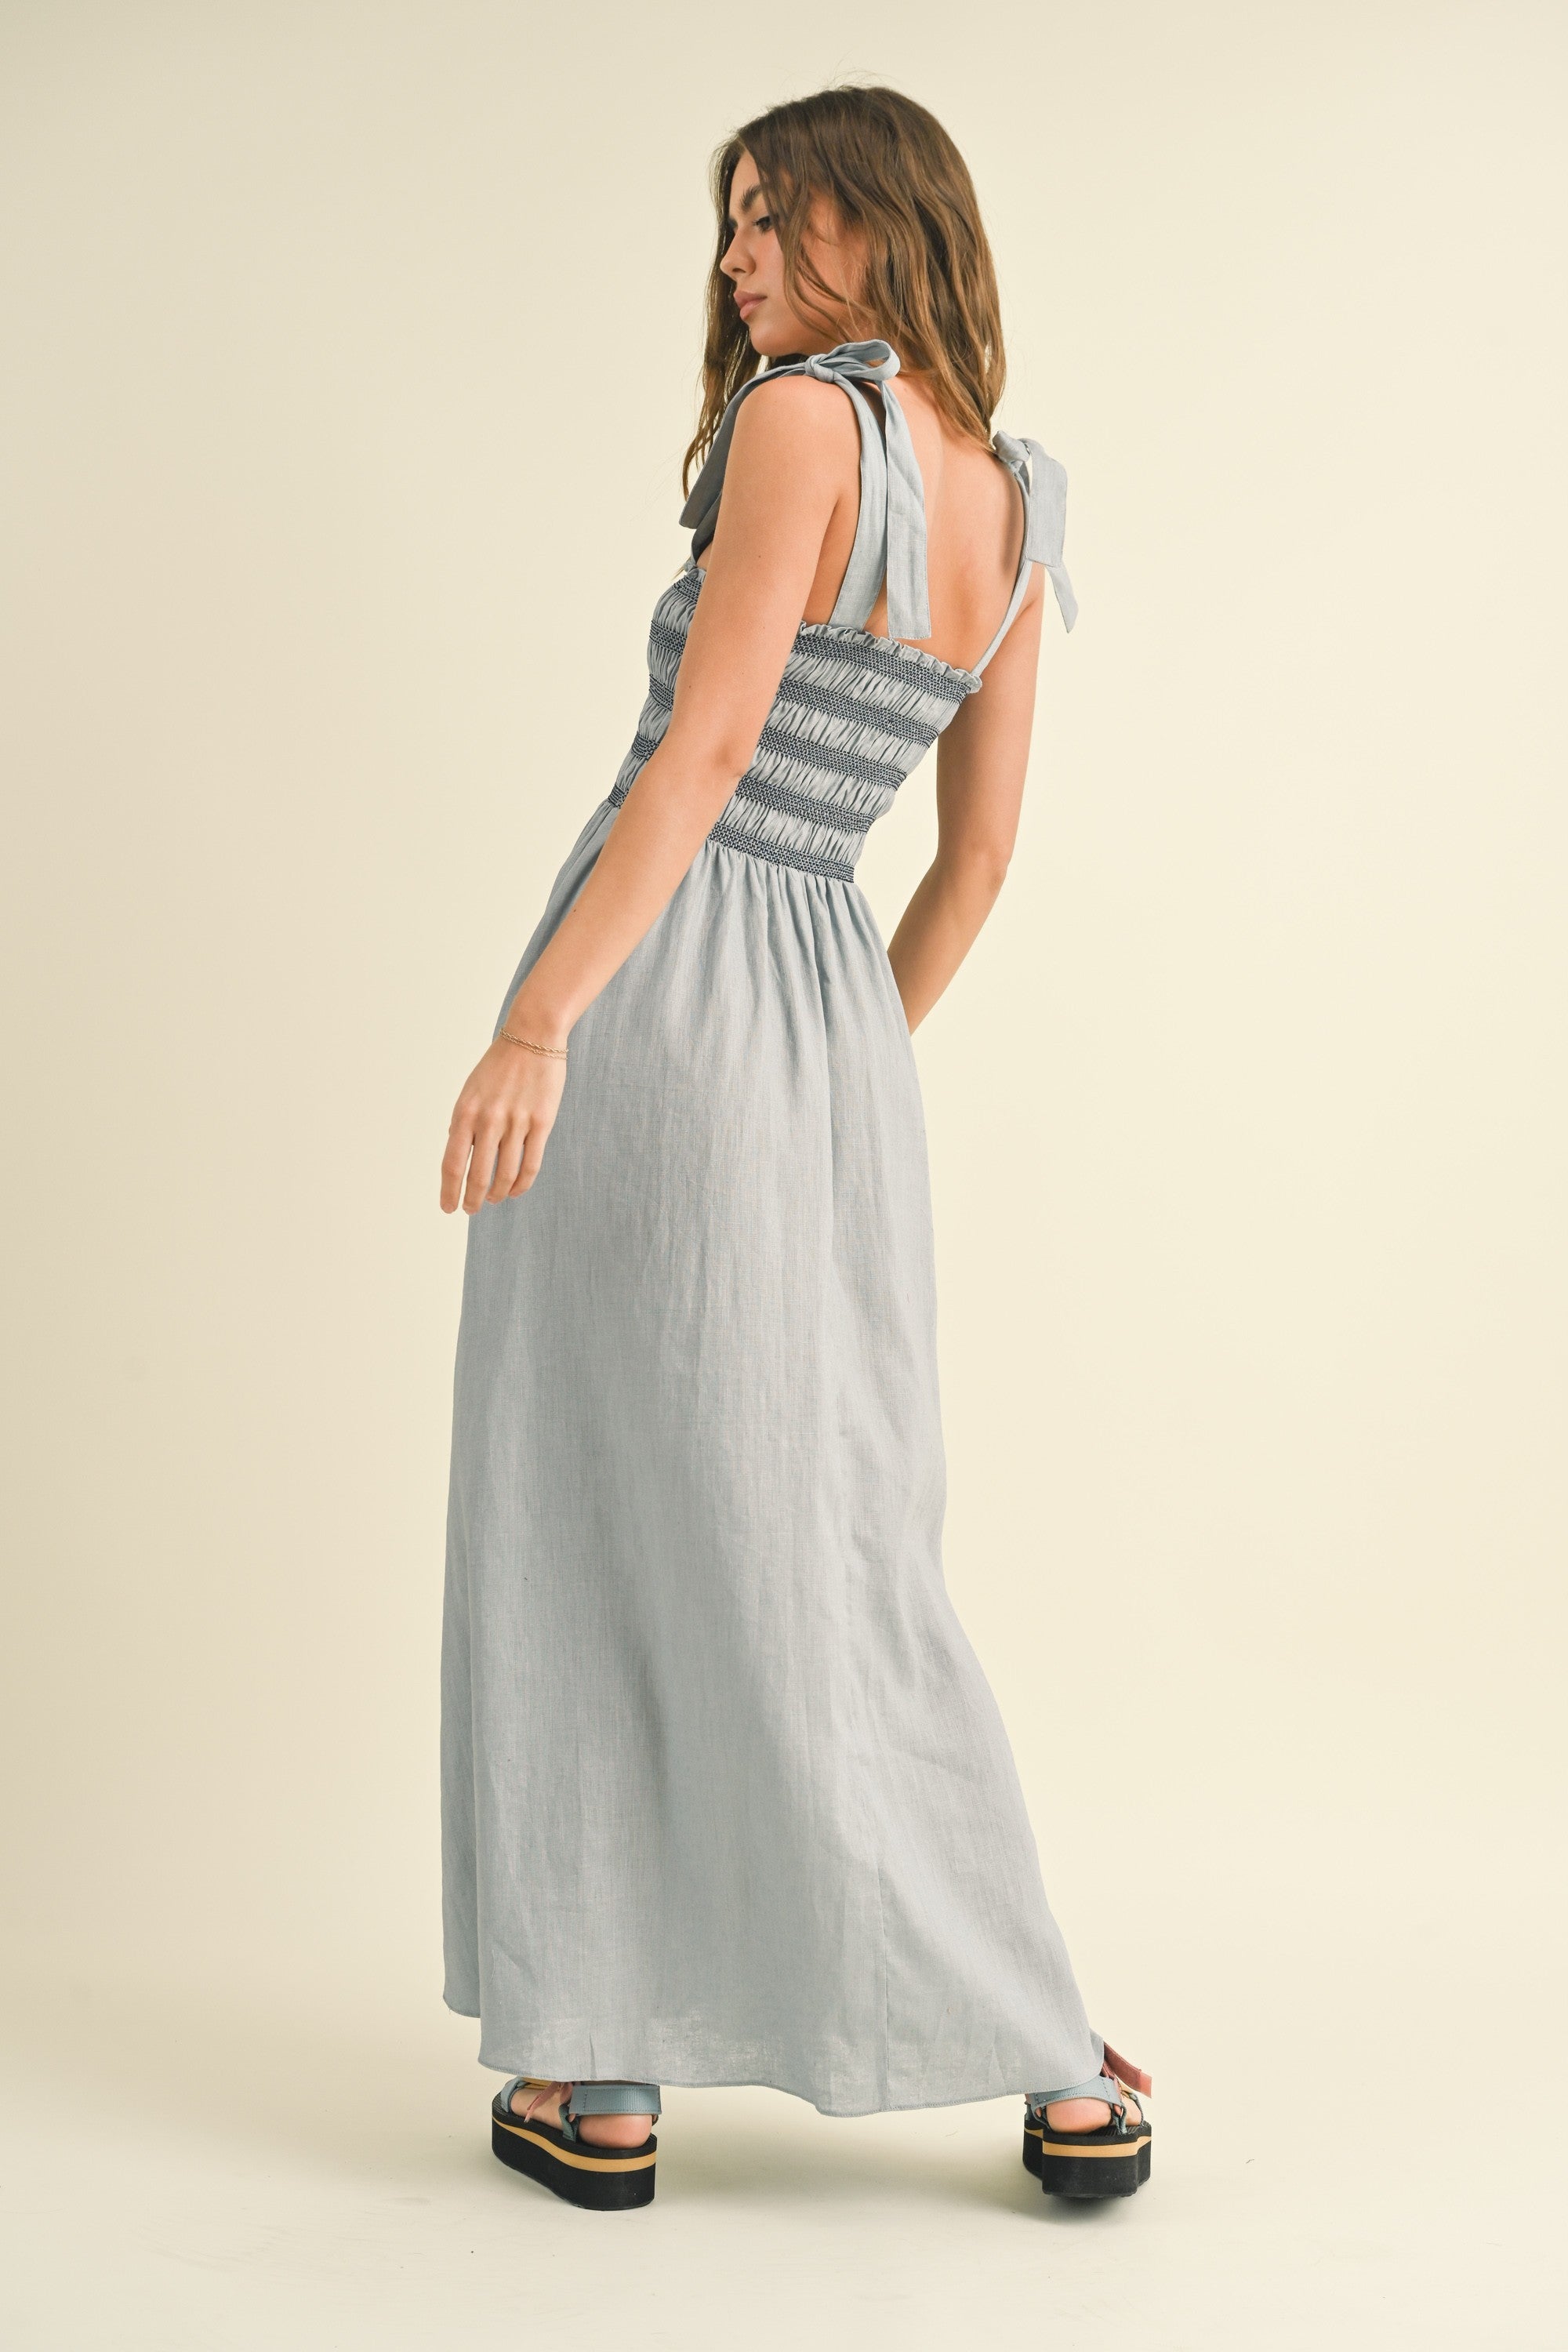 Melody Full-Length Sundress-Dresses-UrbanCulture-Boutique, A North Port, Florida Women's Fashion Boutique